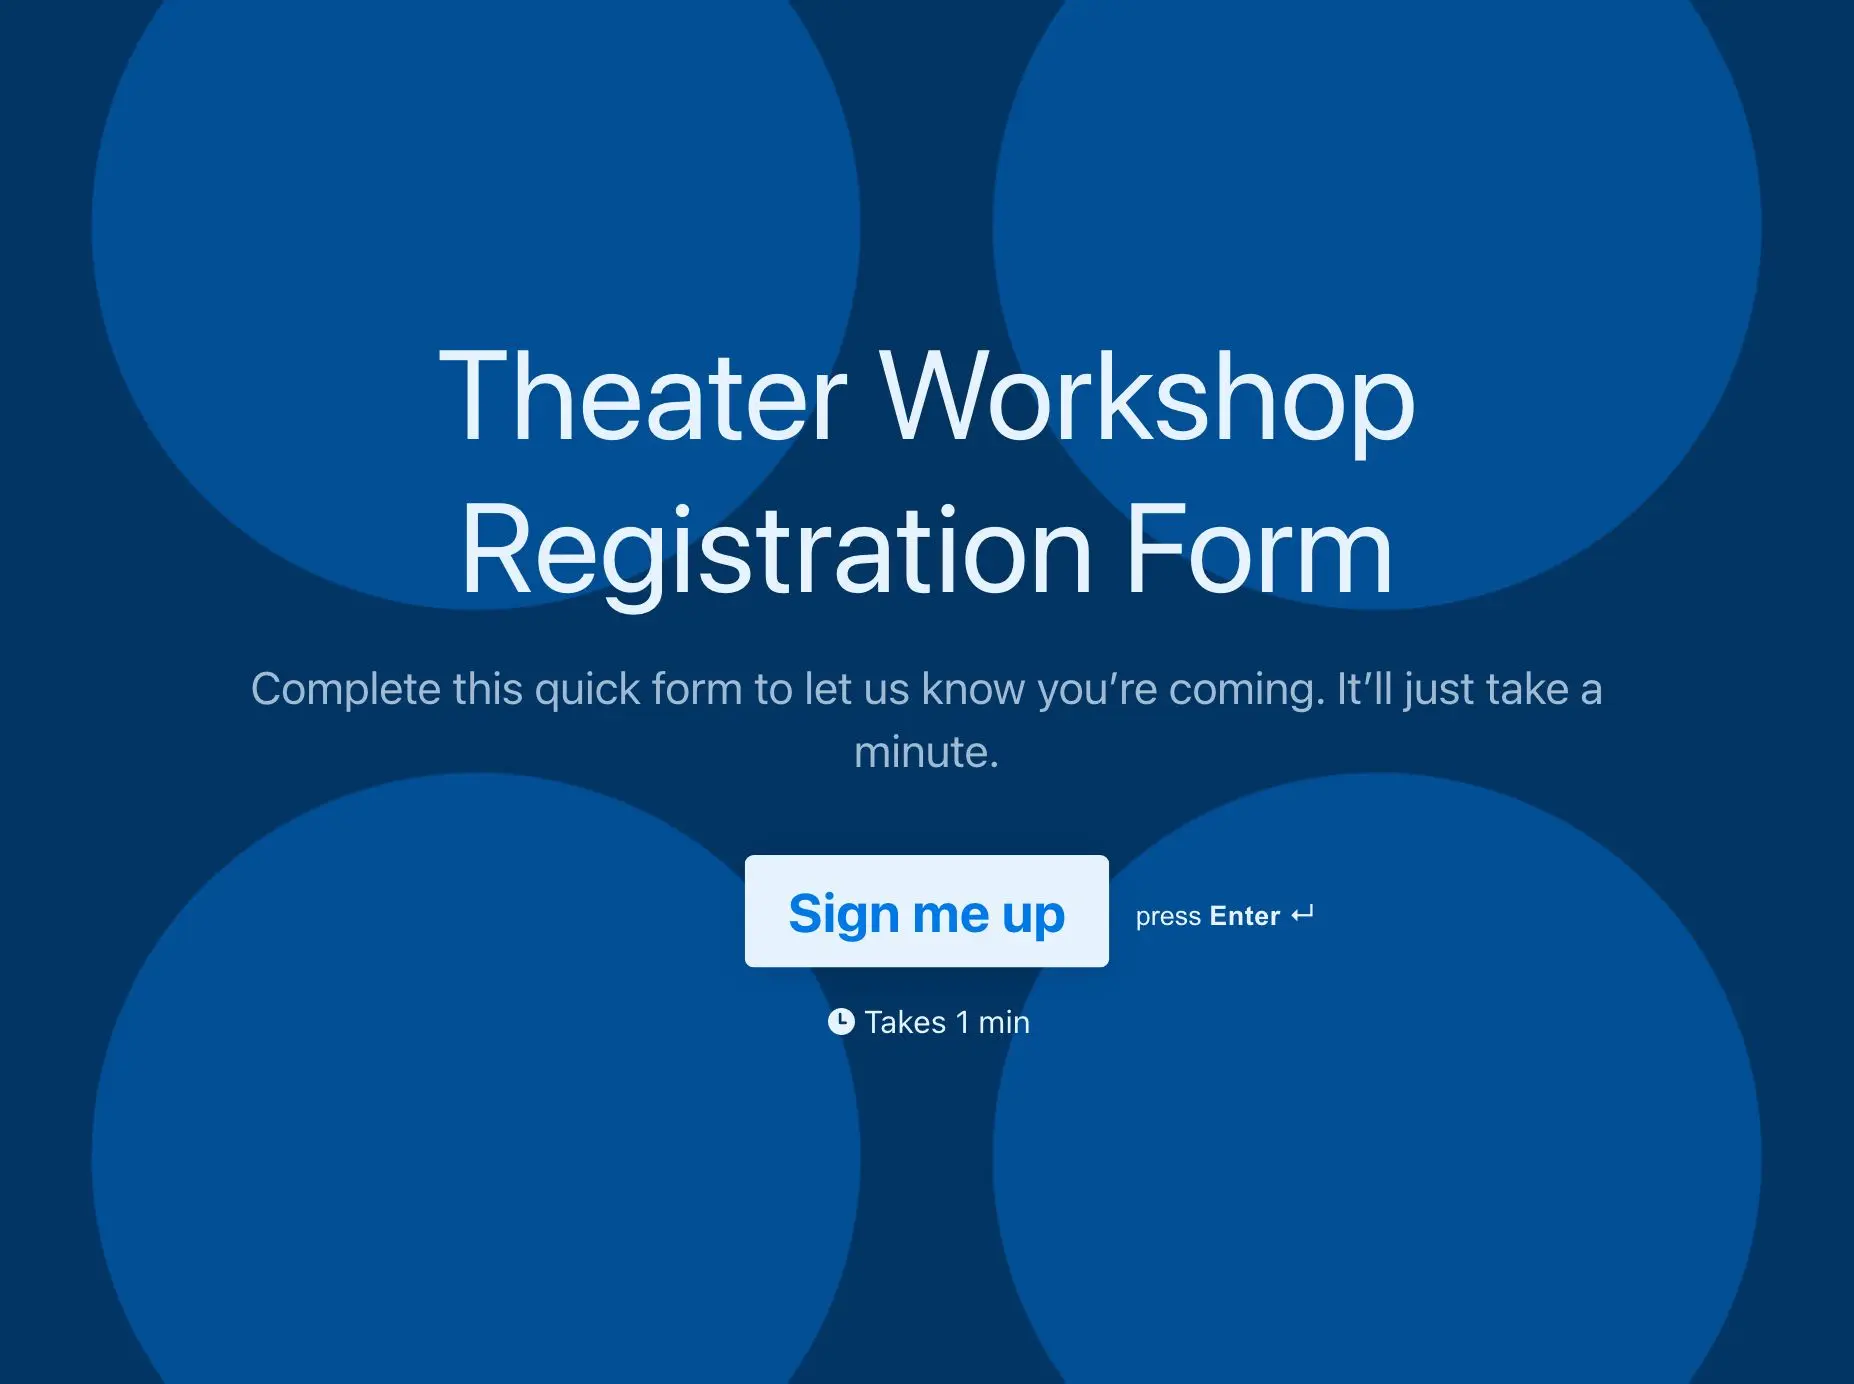 Theater Workshop Registration Form Template Hero